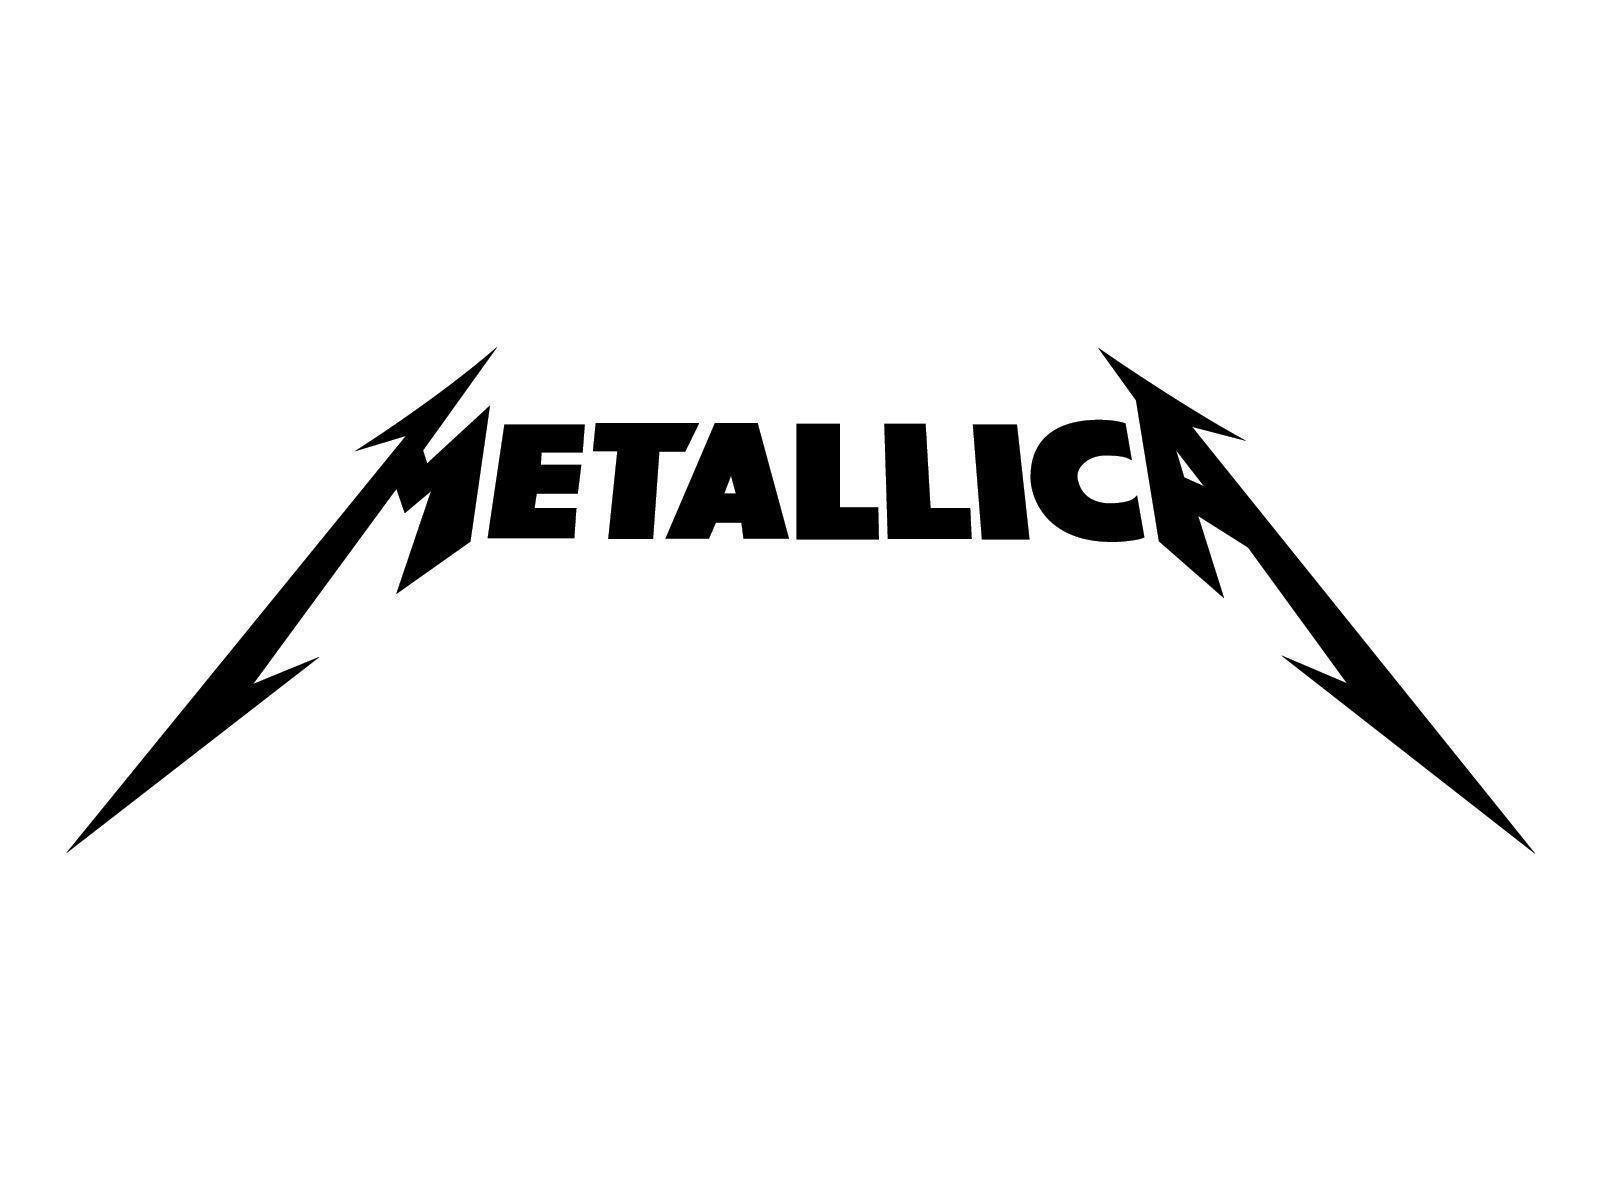 Metallica Wallpaper. Band logos band logos, metal bands